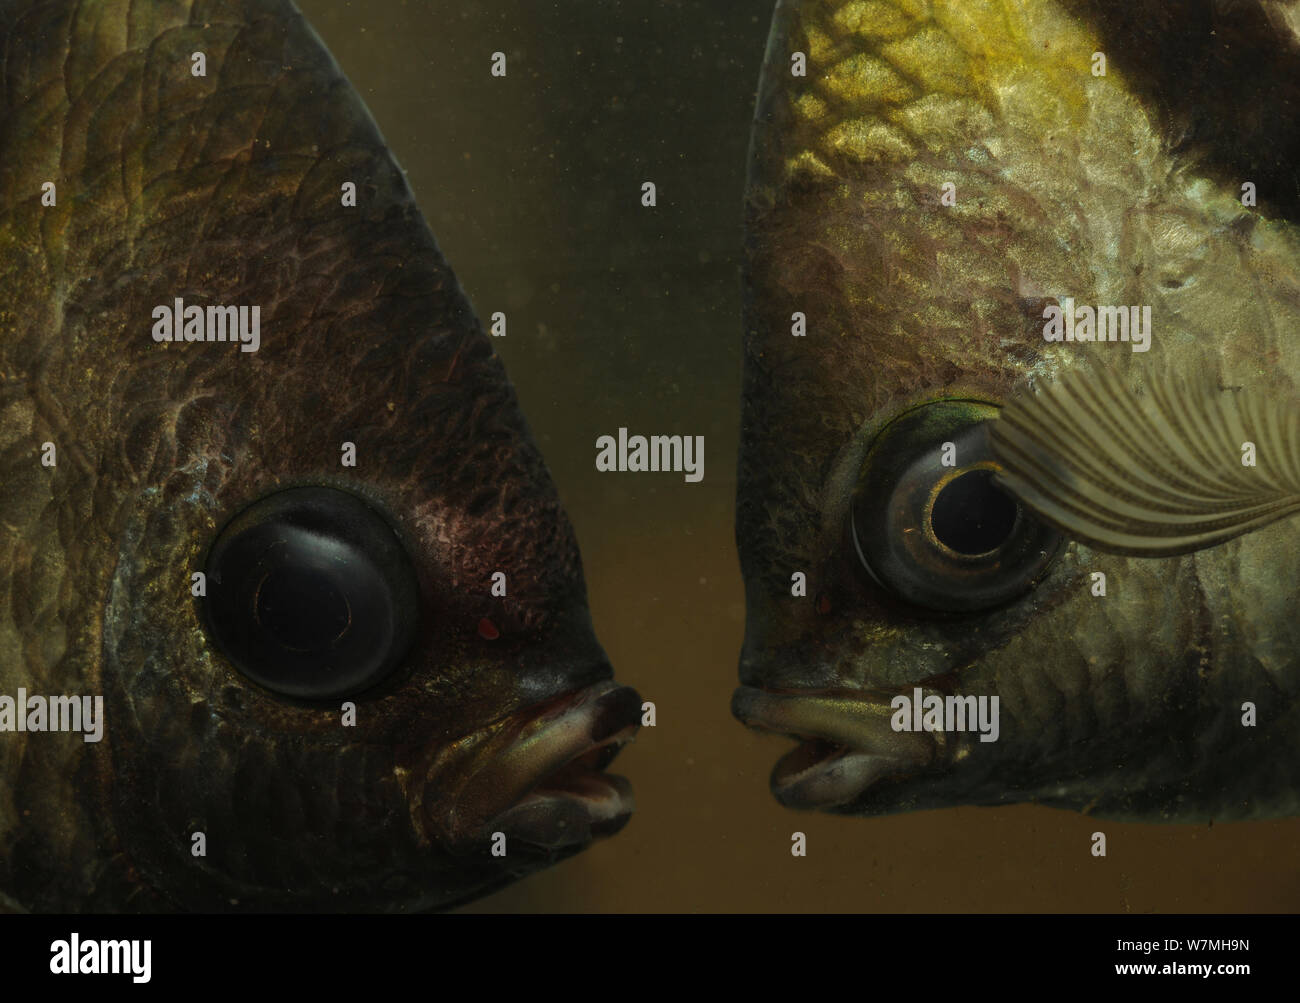 Banded sergeant fish (Abudefduf septemfasciatus) close up head portrait, Hainan Island, China. Stock Photo